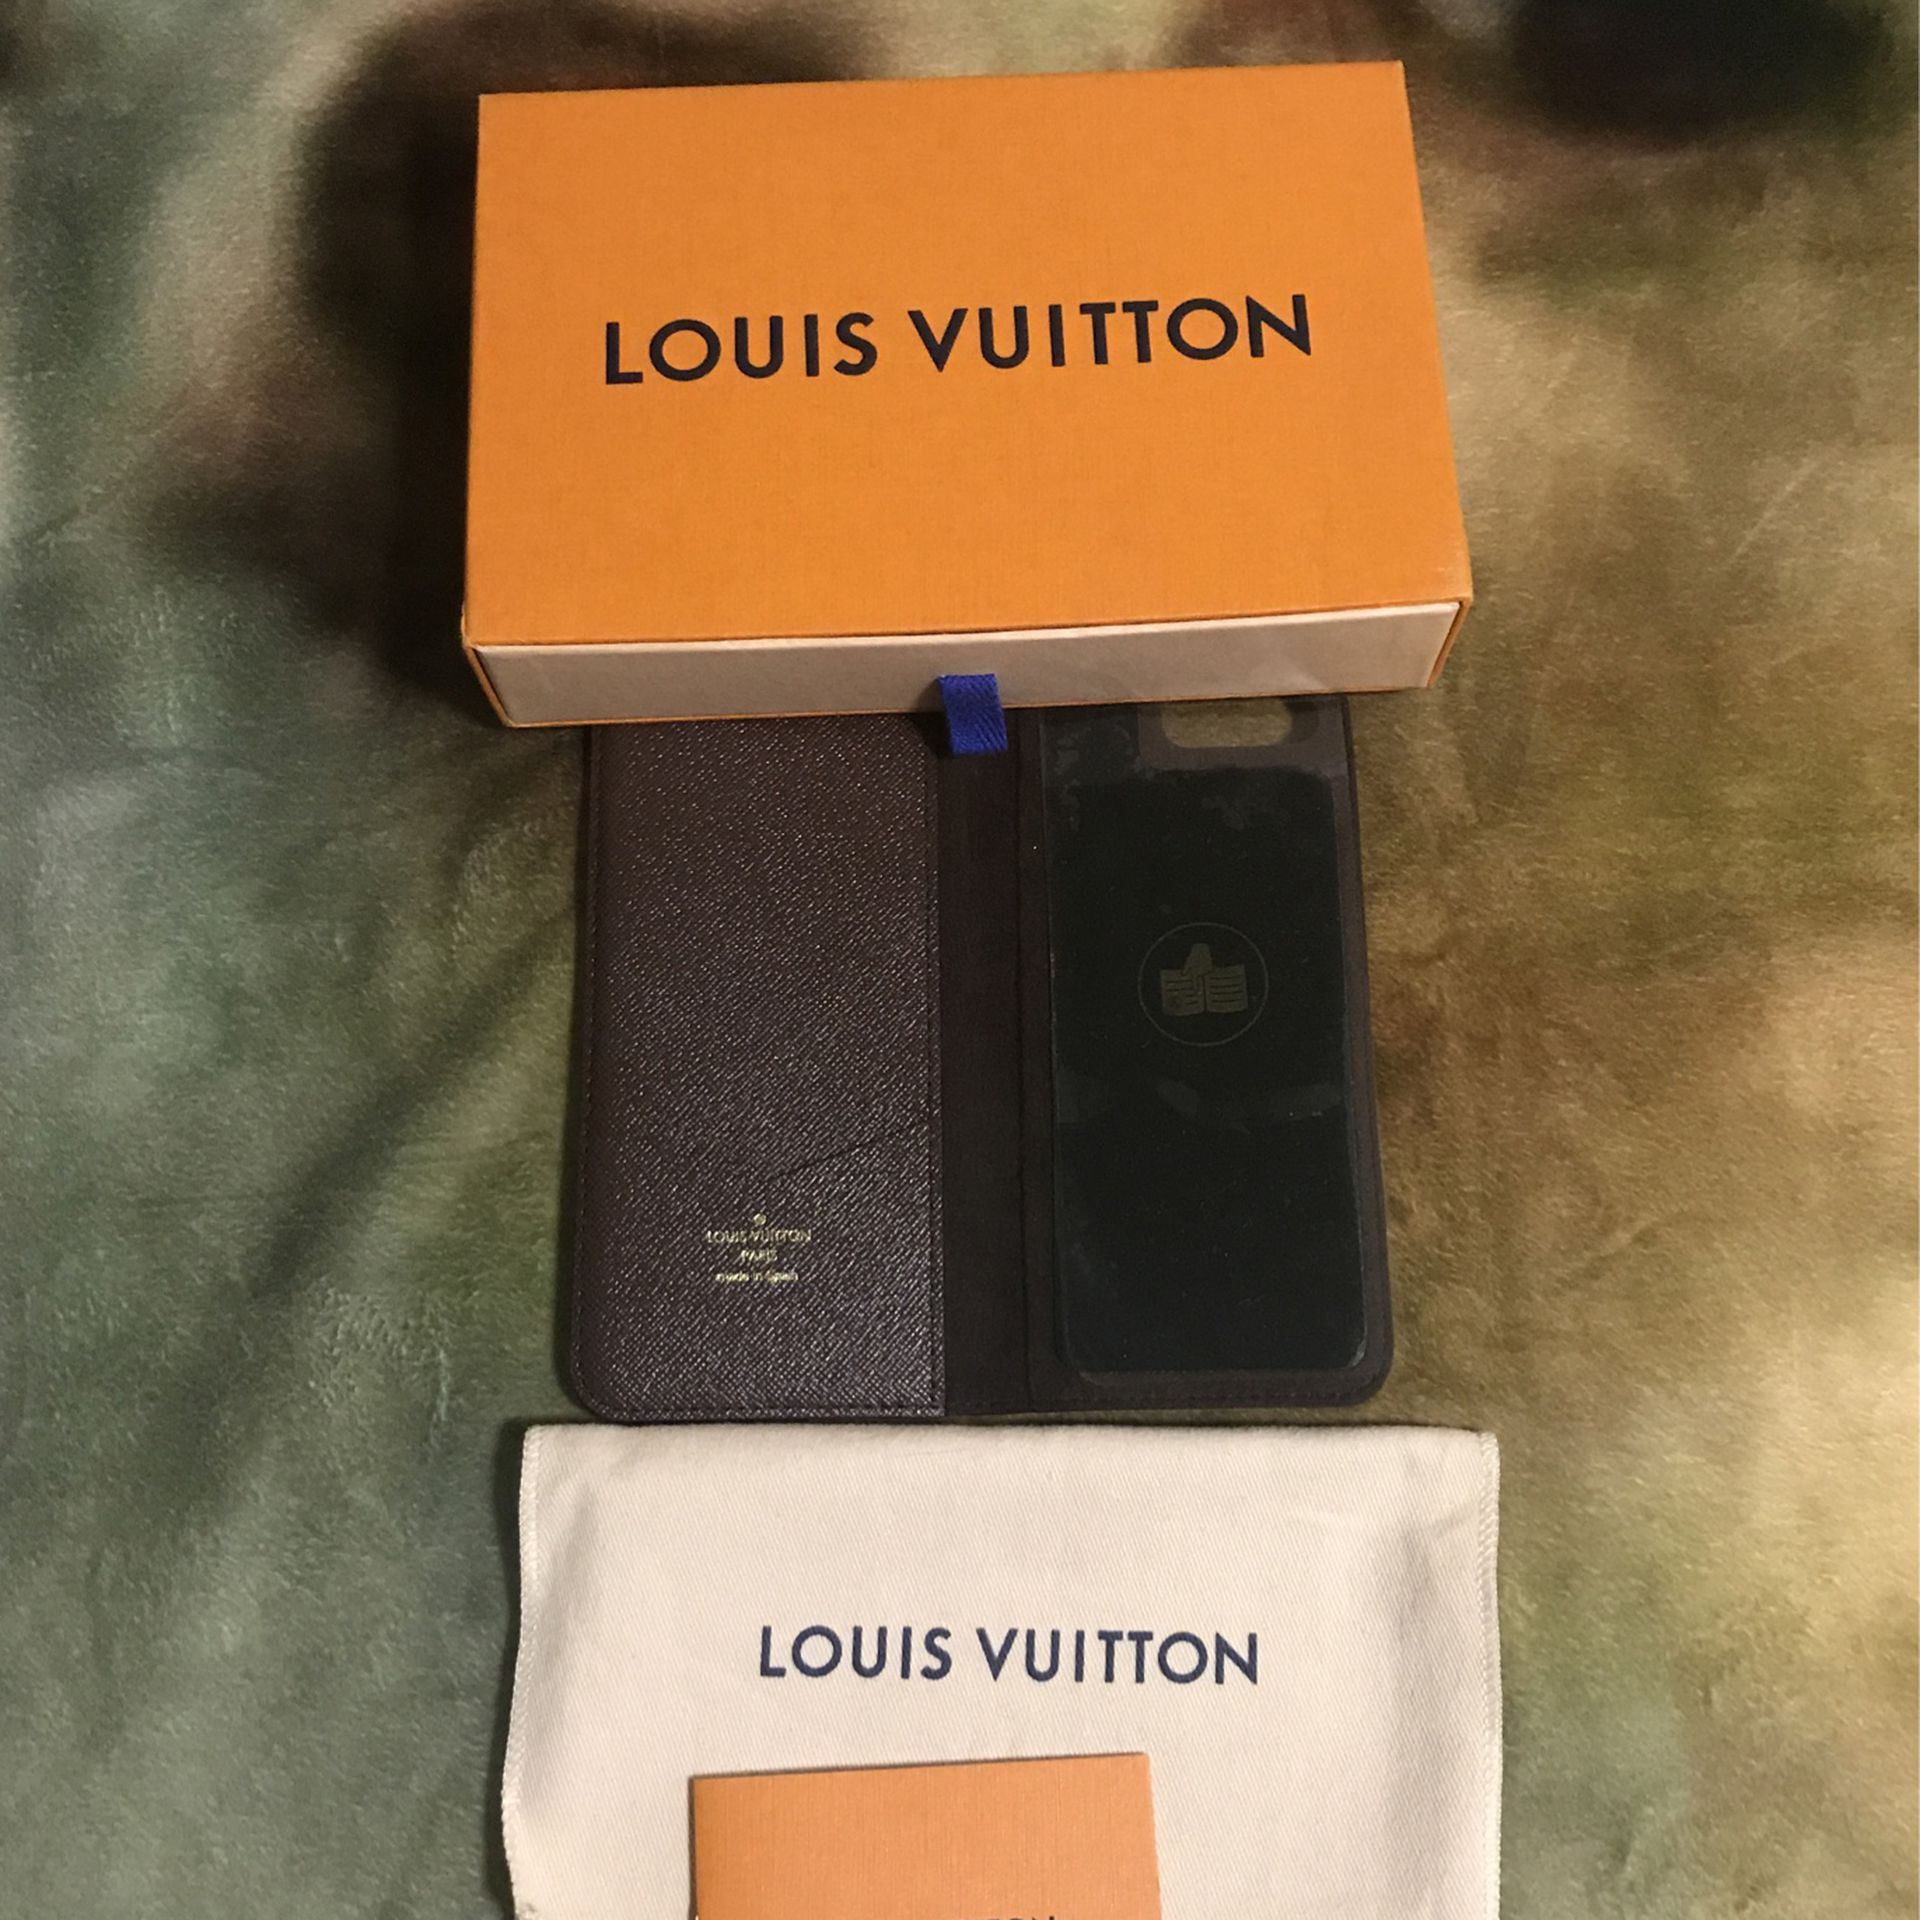 Louis Vuitton IPhone Wallet Case for Sale in San Bernardino, CA